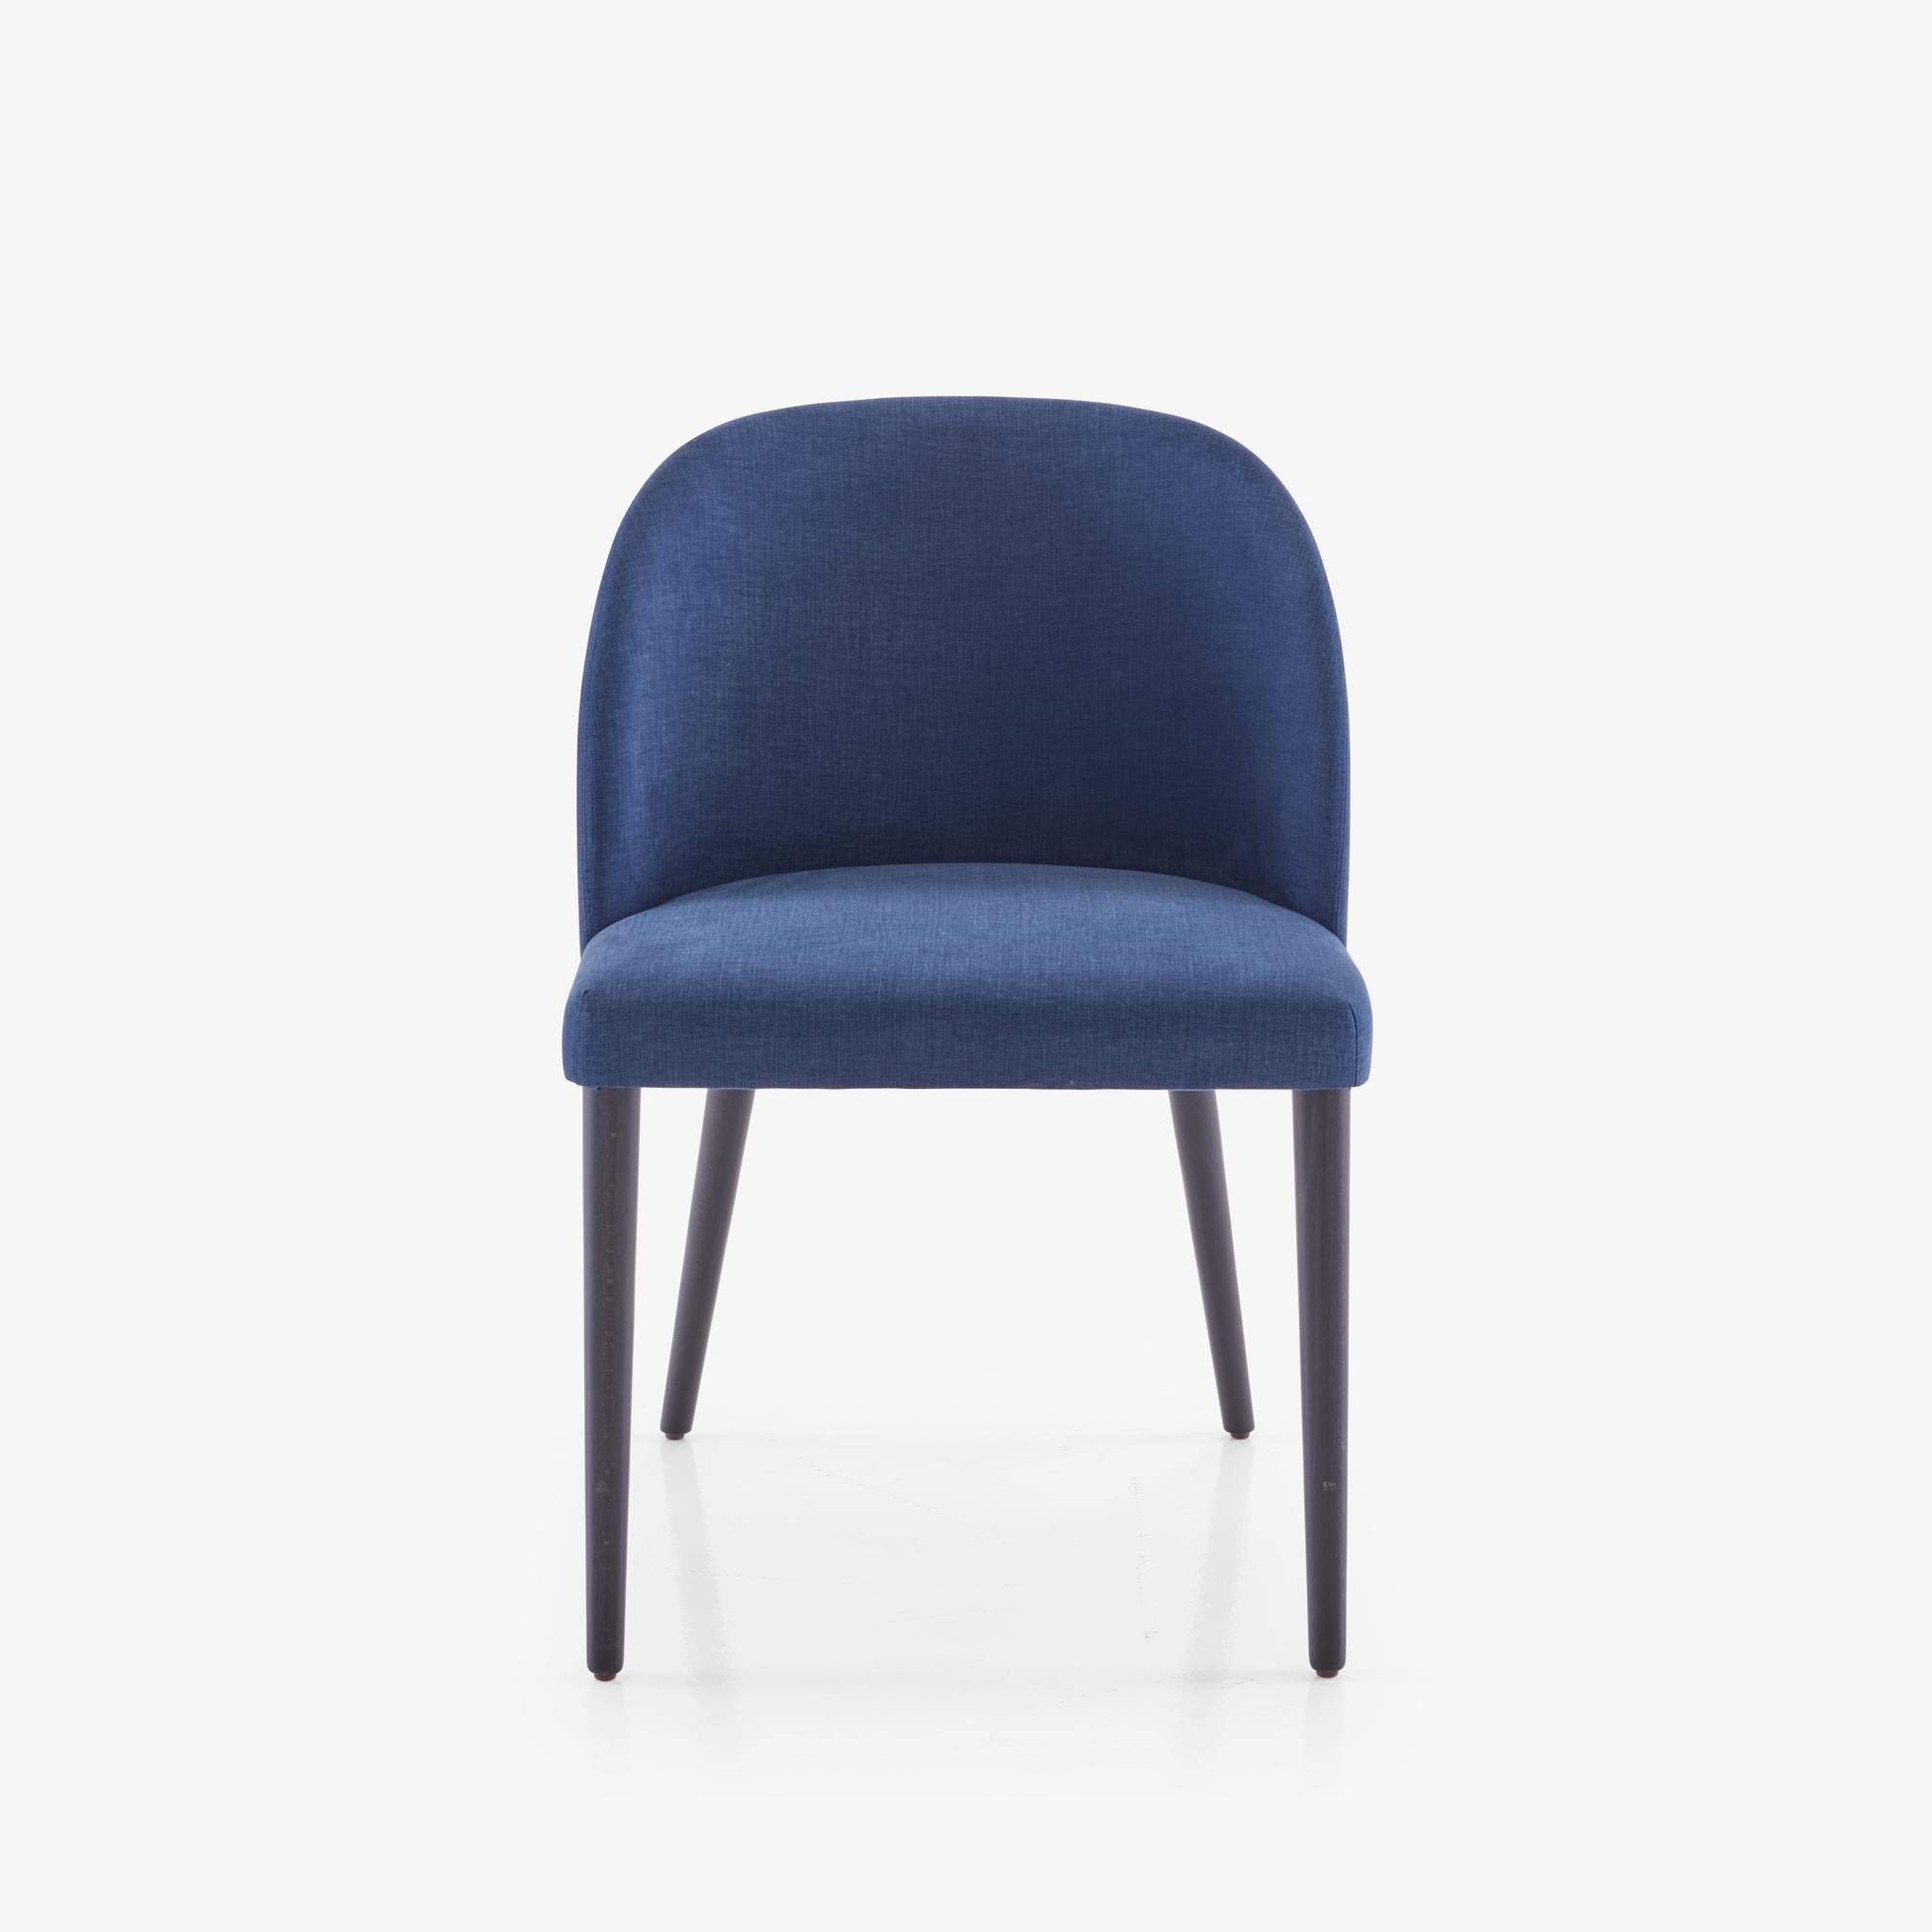 Image Dining chair fabric-bleu nuit  1